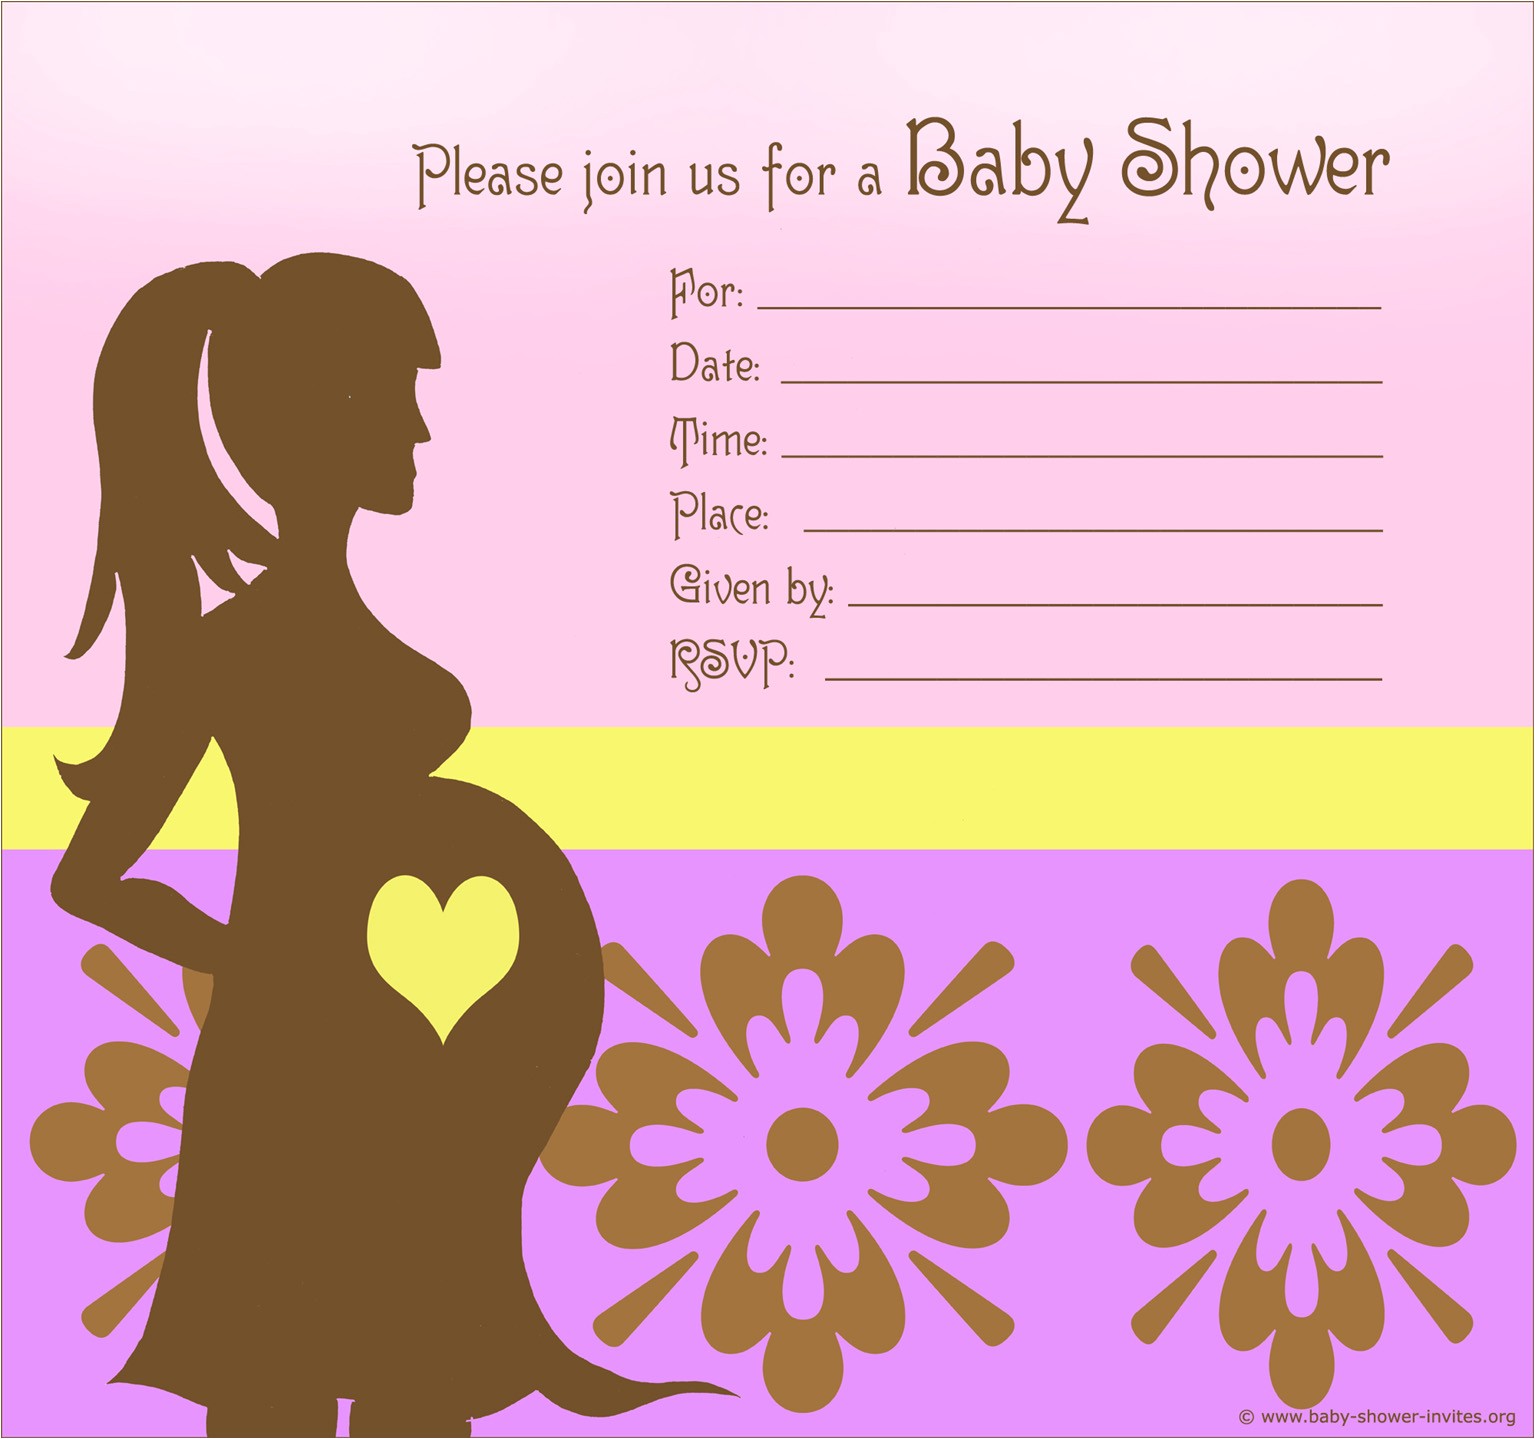 Customizable Baby Shower Invitations Free Custom Baby Shower Invitations Free